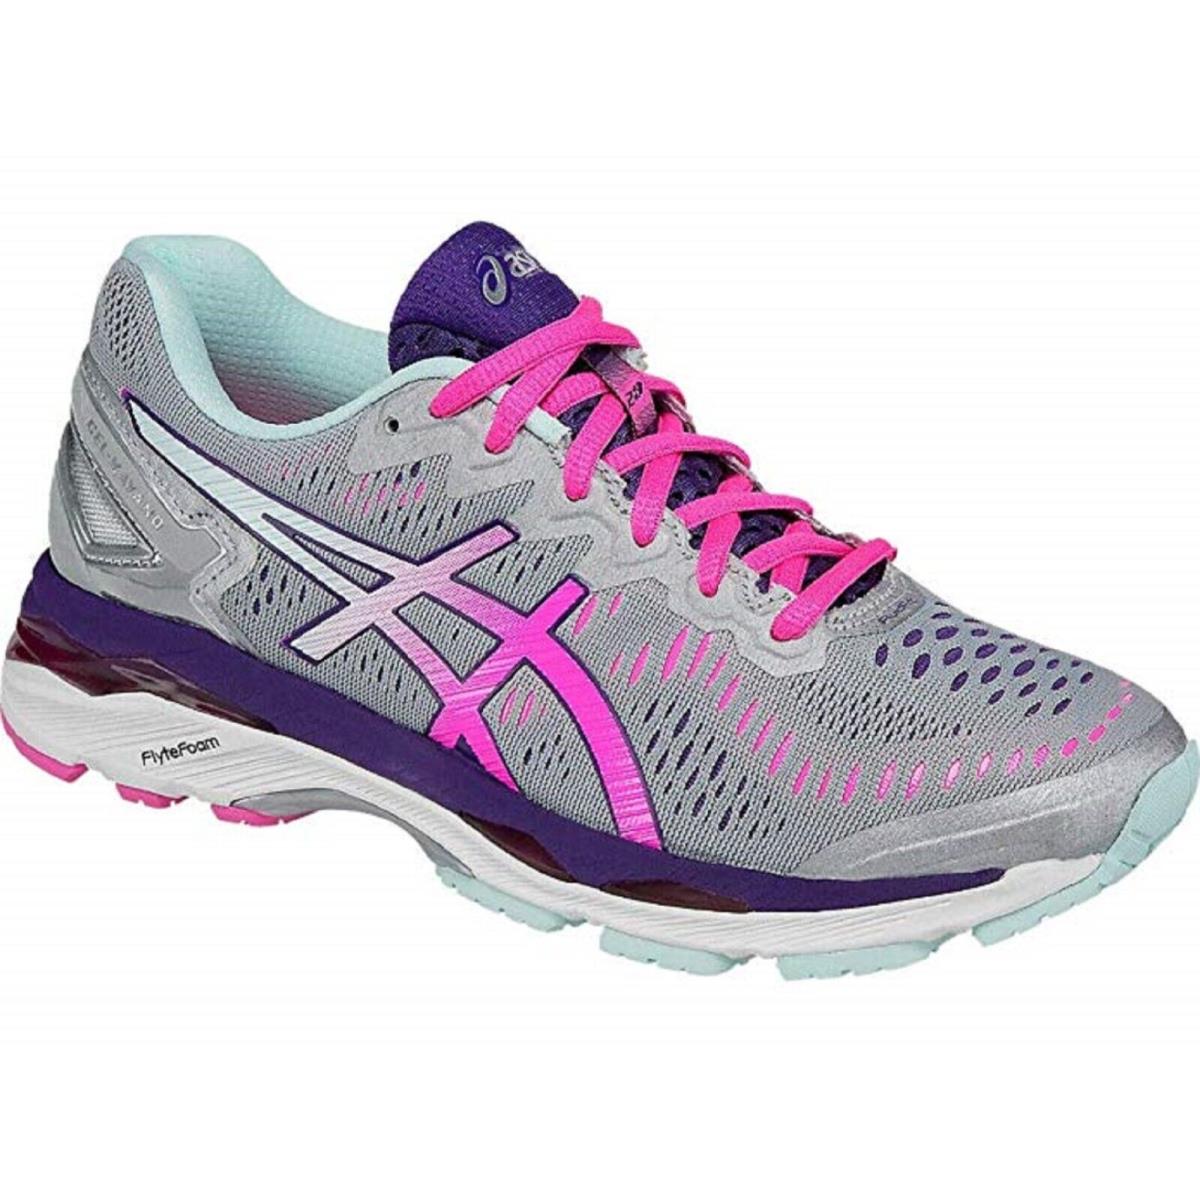 Asics Gel Kayano 23 Women`s Running Gym Shoes. Silver Pink Purple. US 6 2A